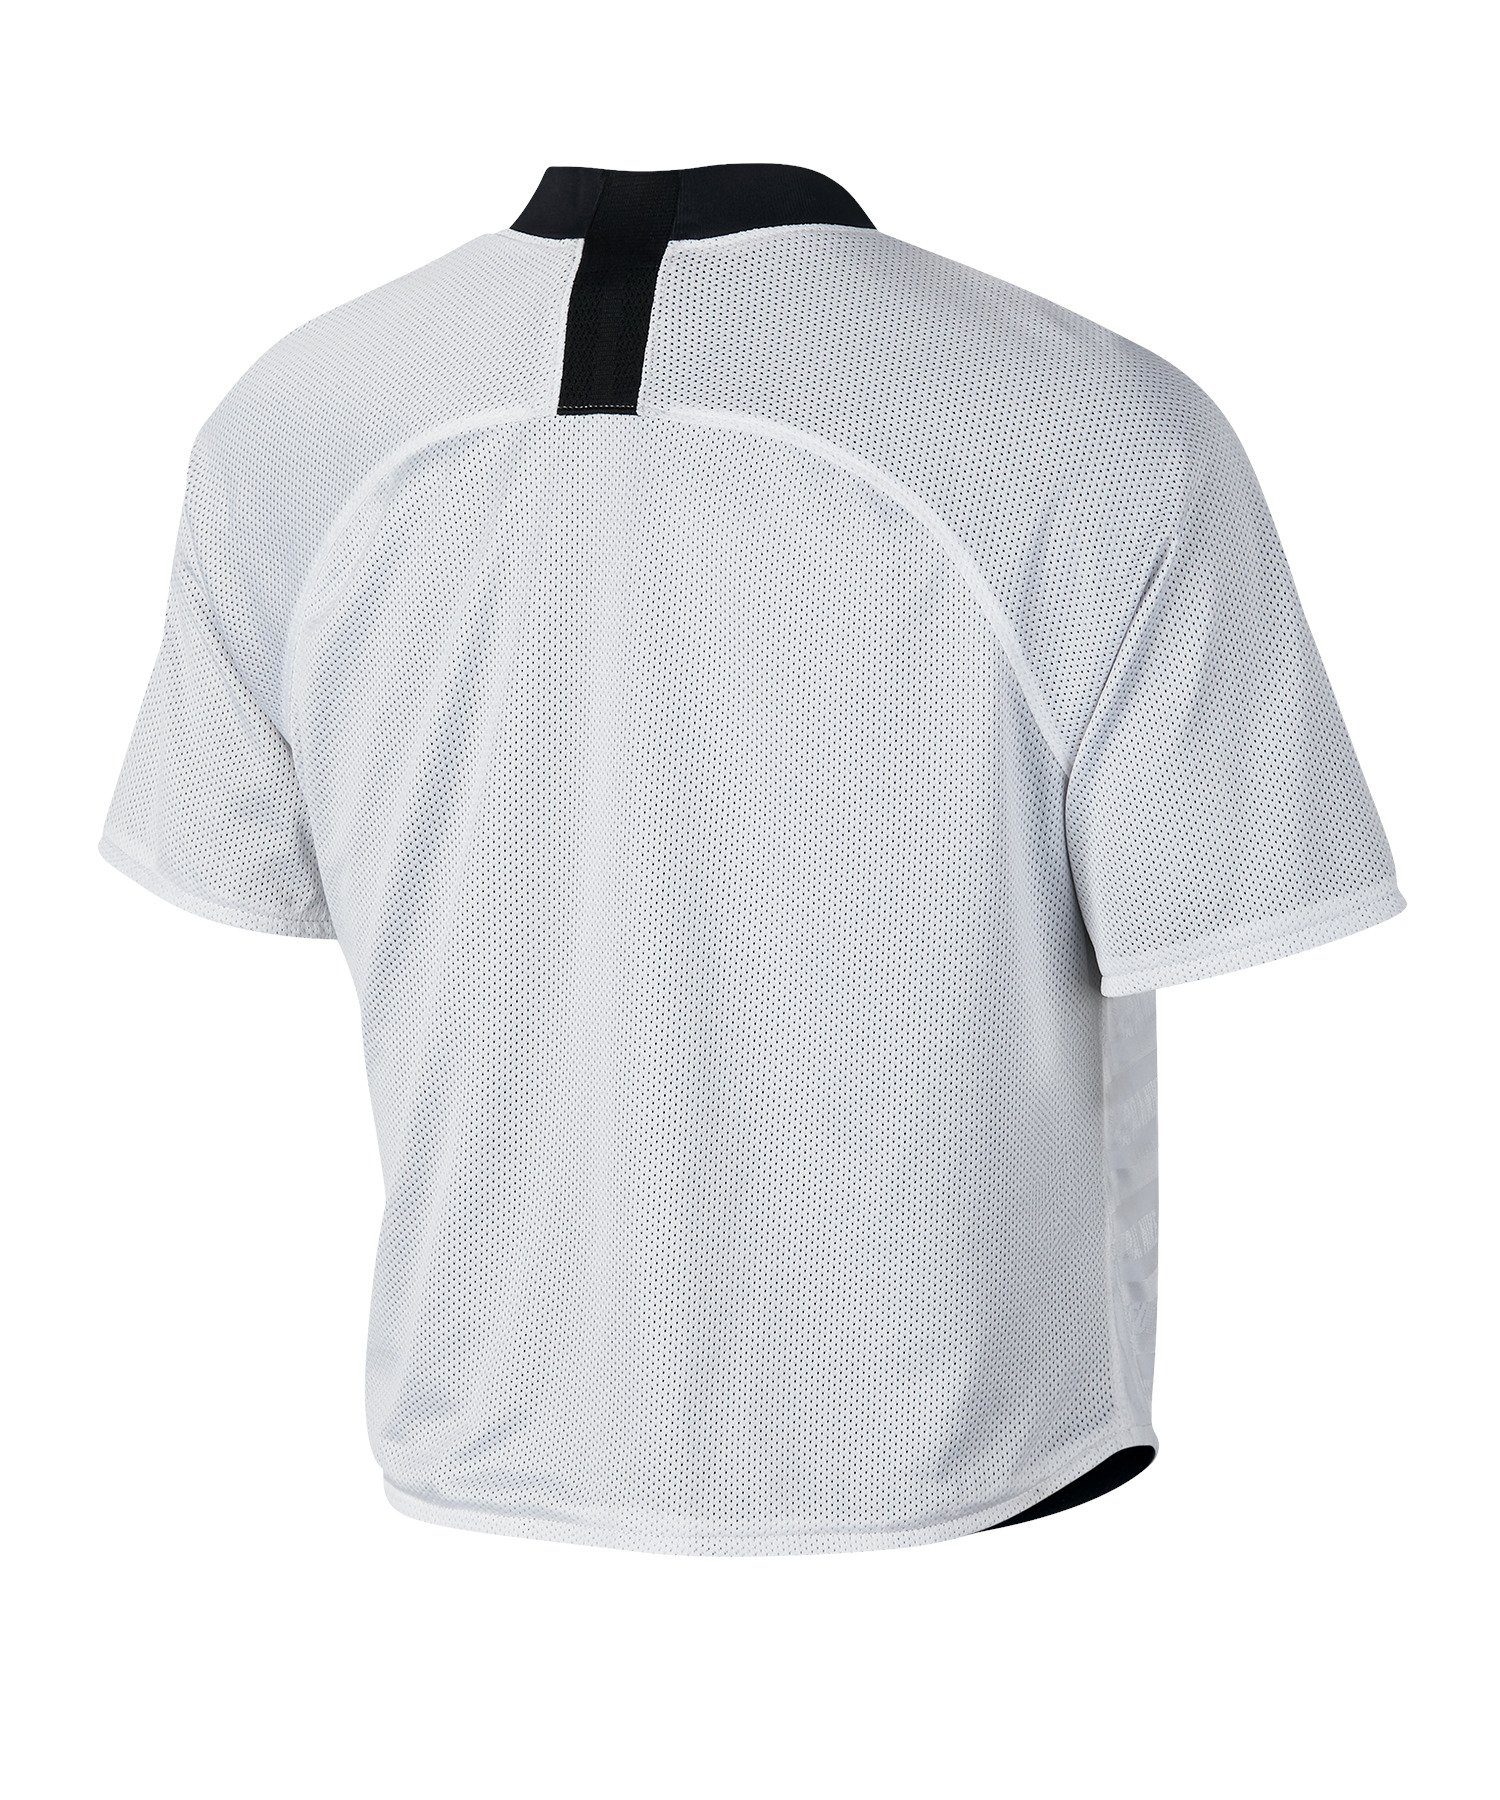 Schwarz T-Shirt Sportswear Crop default Damen F.C. Nike Top